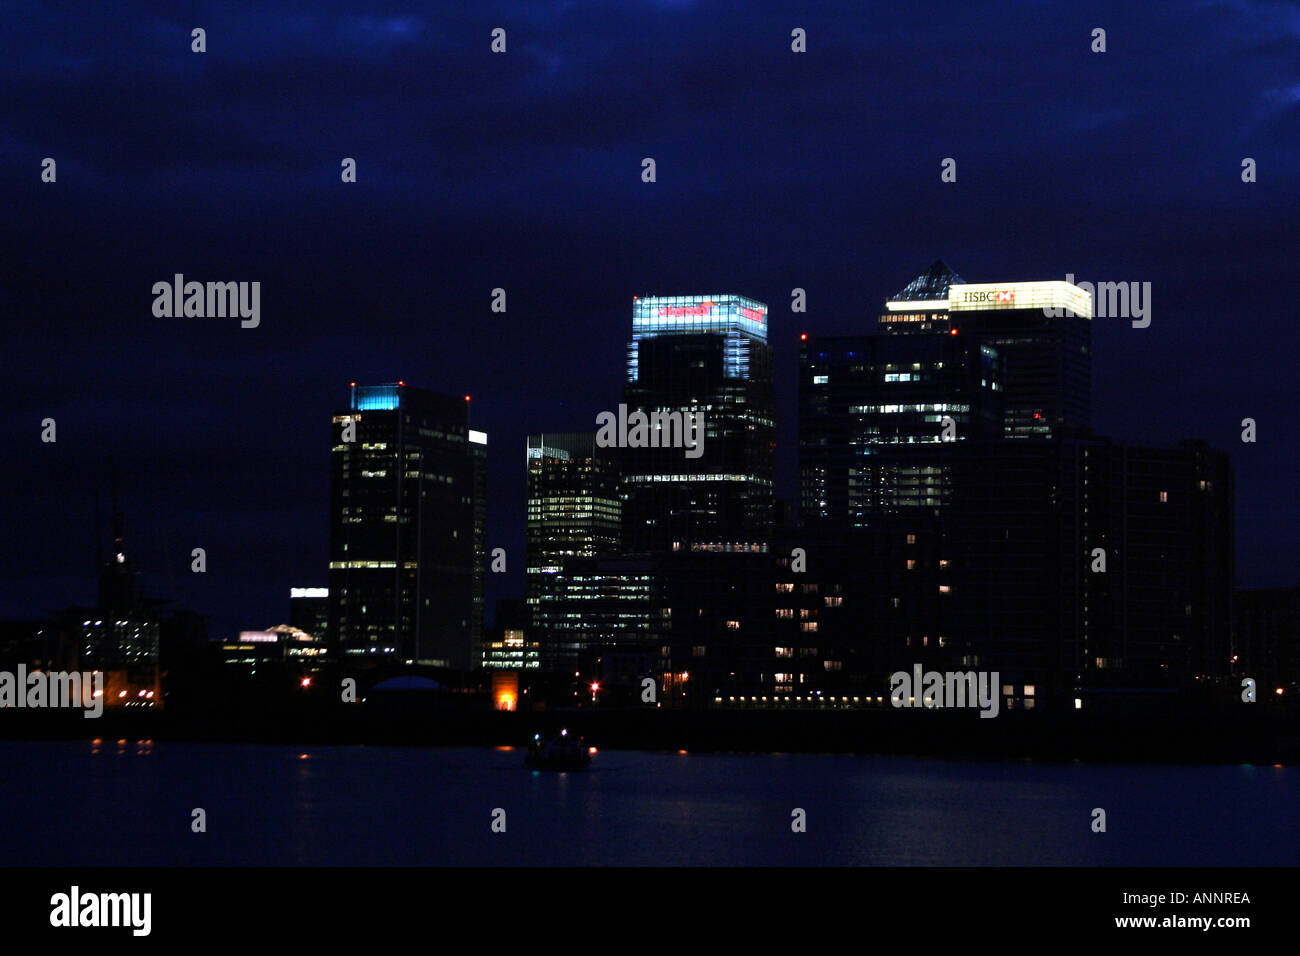 London docklands skyline at night Stock Photo